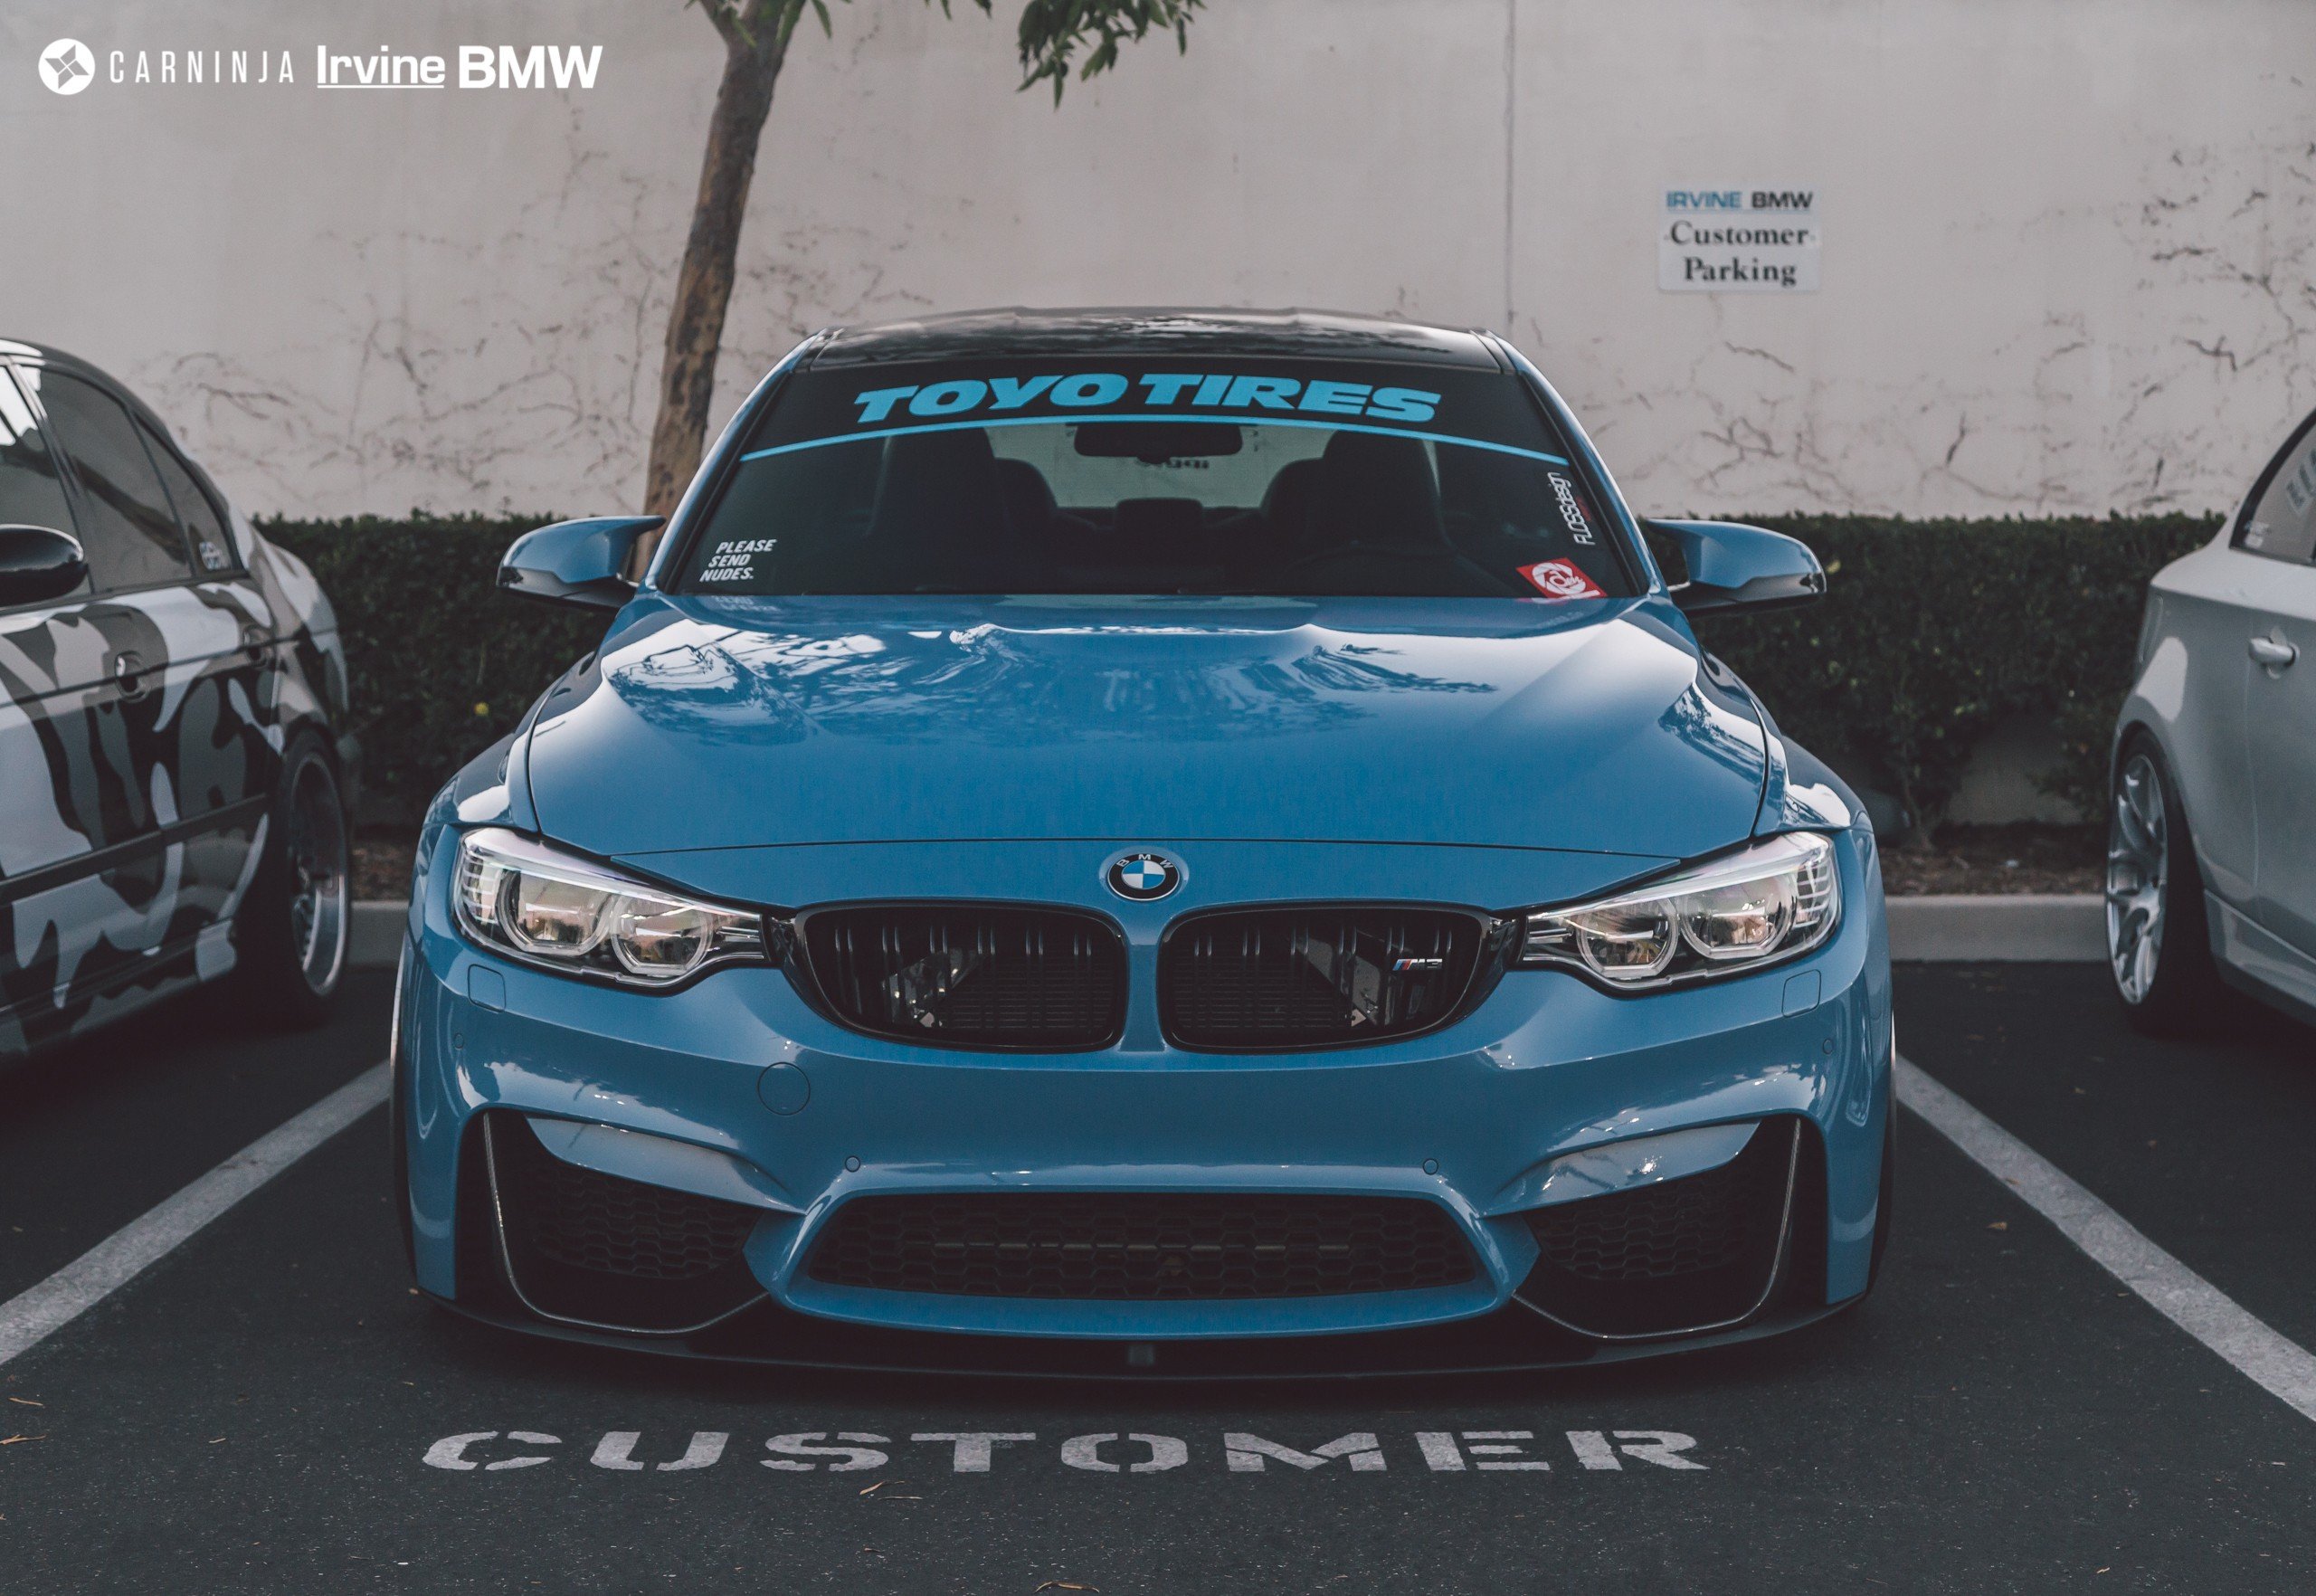 BMW M4 Coupe, BMW M4 Cabrio, BMW M4, LB Performance, LB Works, Car, Low, Vossen, Street, Carninja Wallpaper